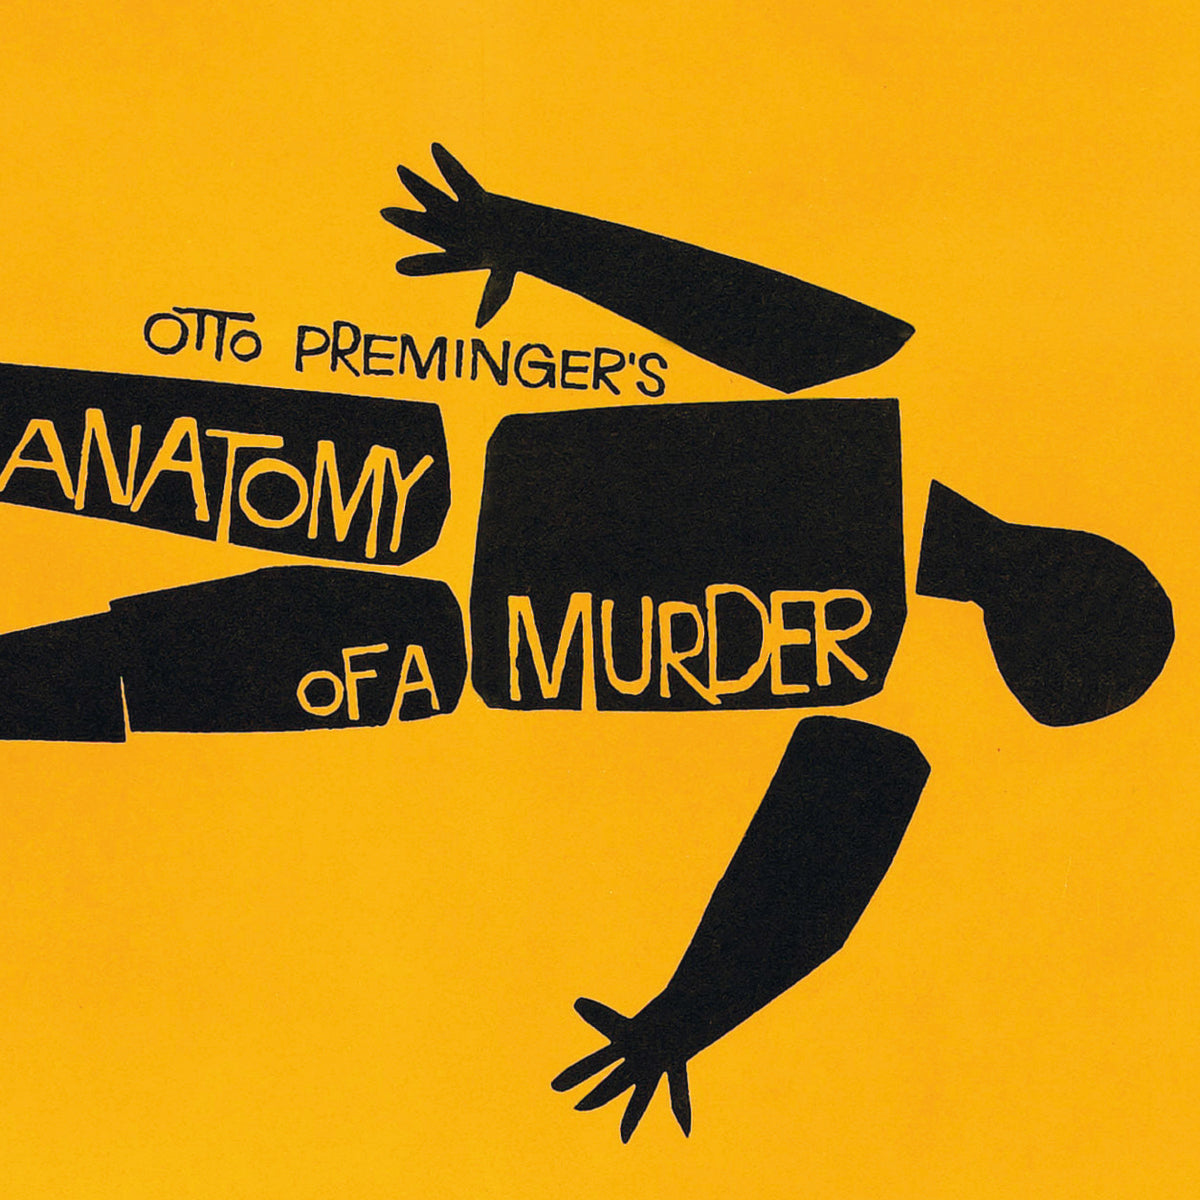 Anatomy of a Murder 2